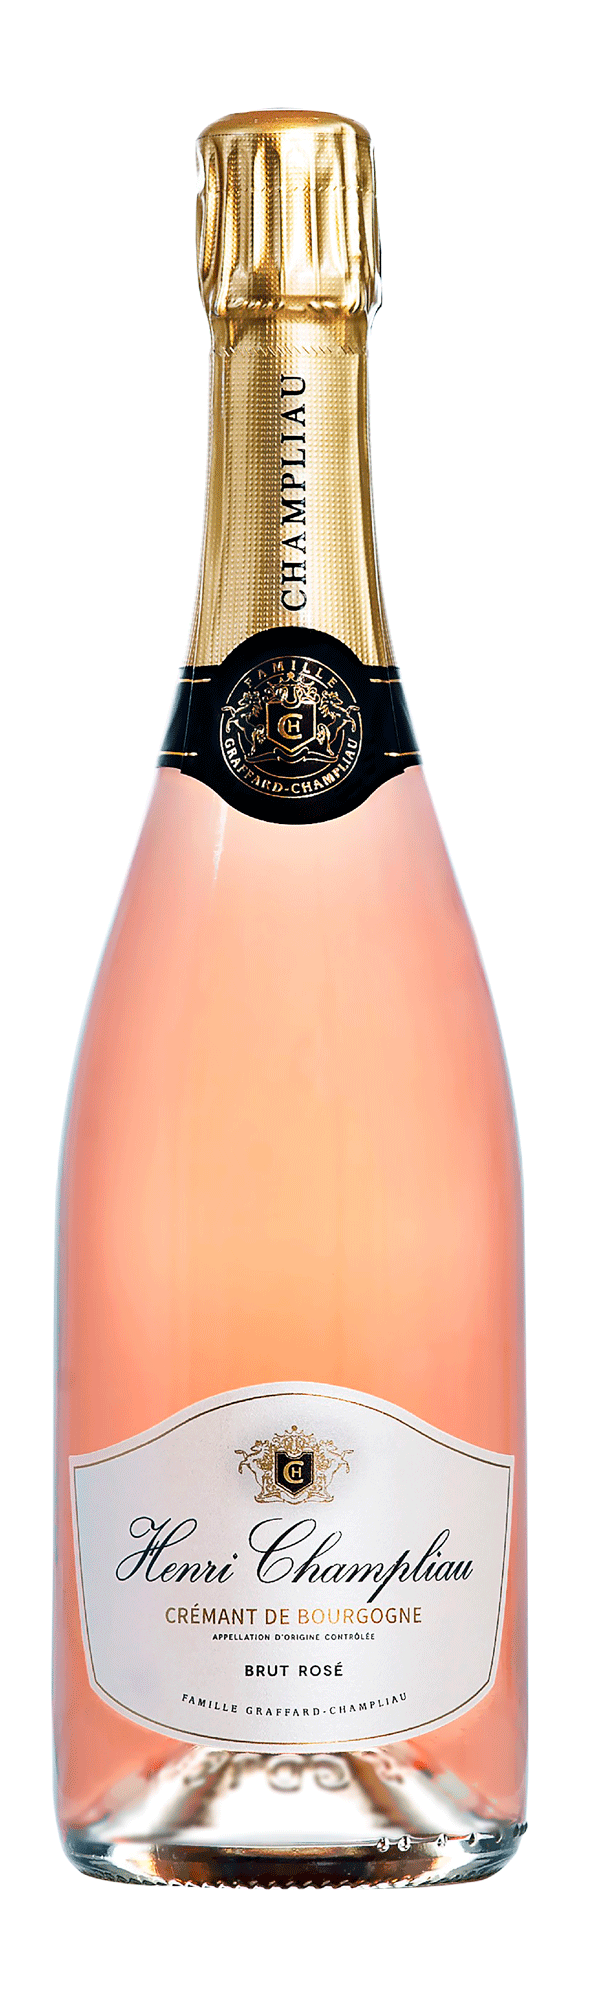 Henri Champliau Cremant De Bourgogne Brut Rose 750ml